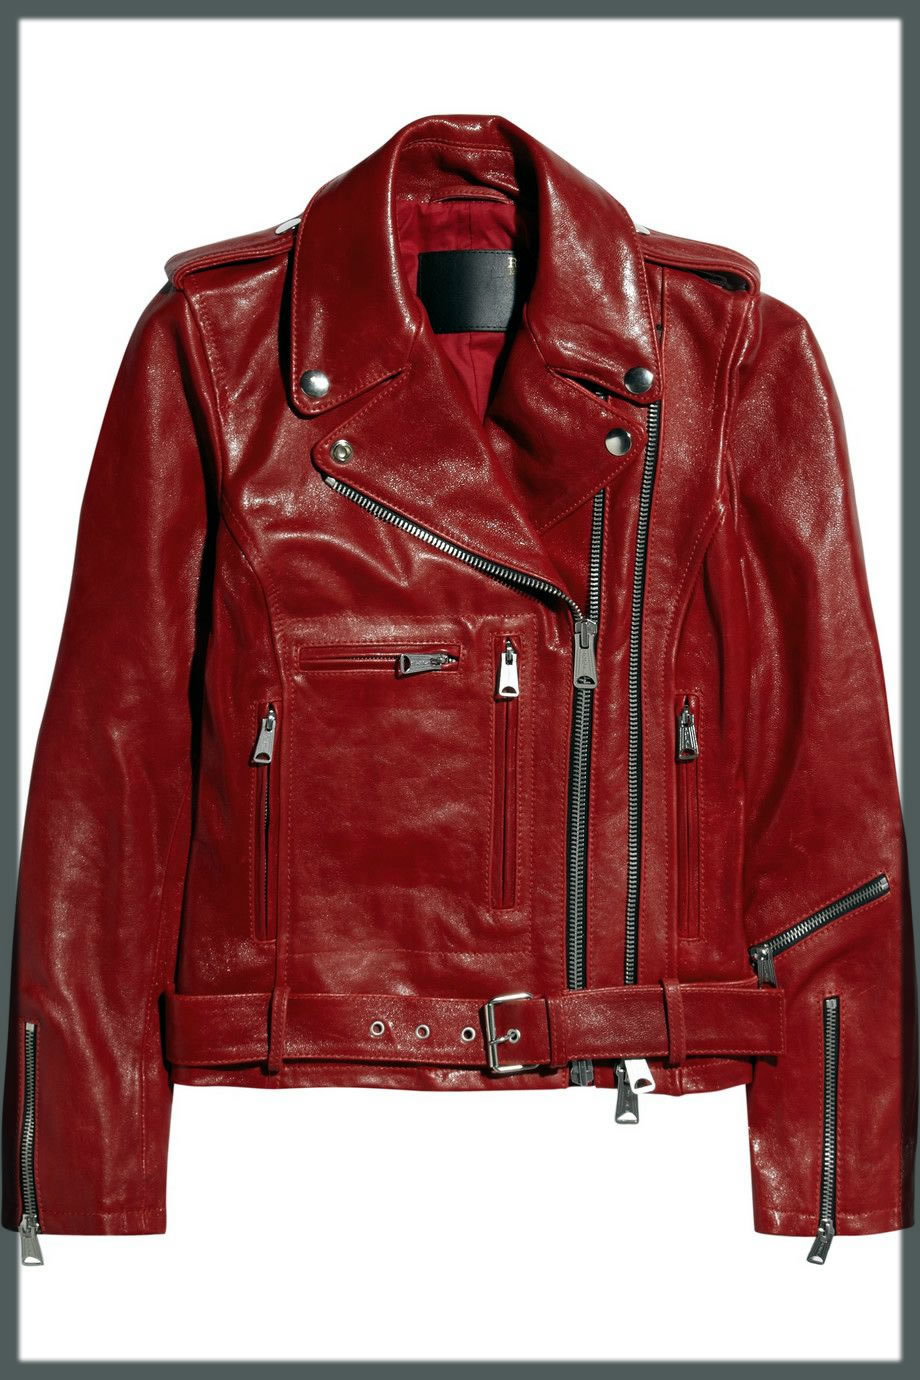 Glossed Leather Jacket